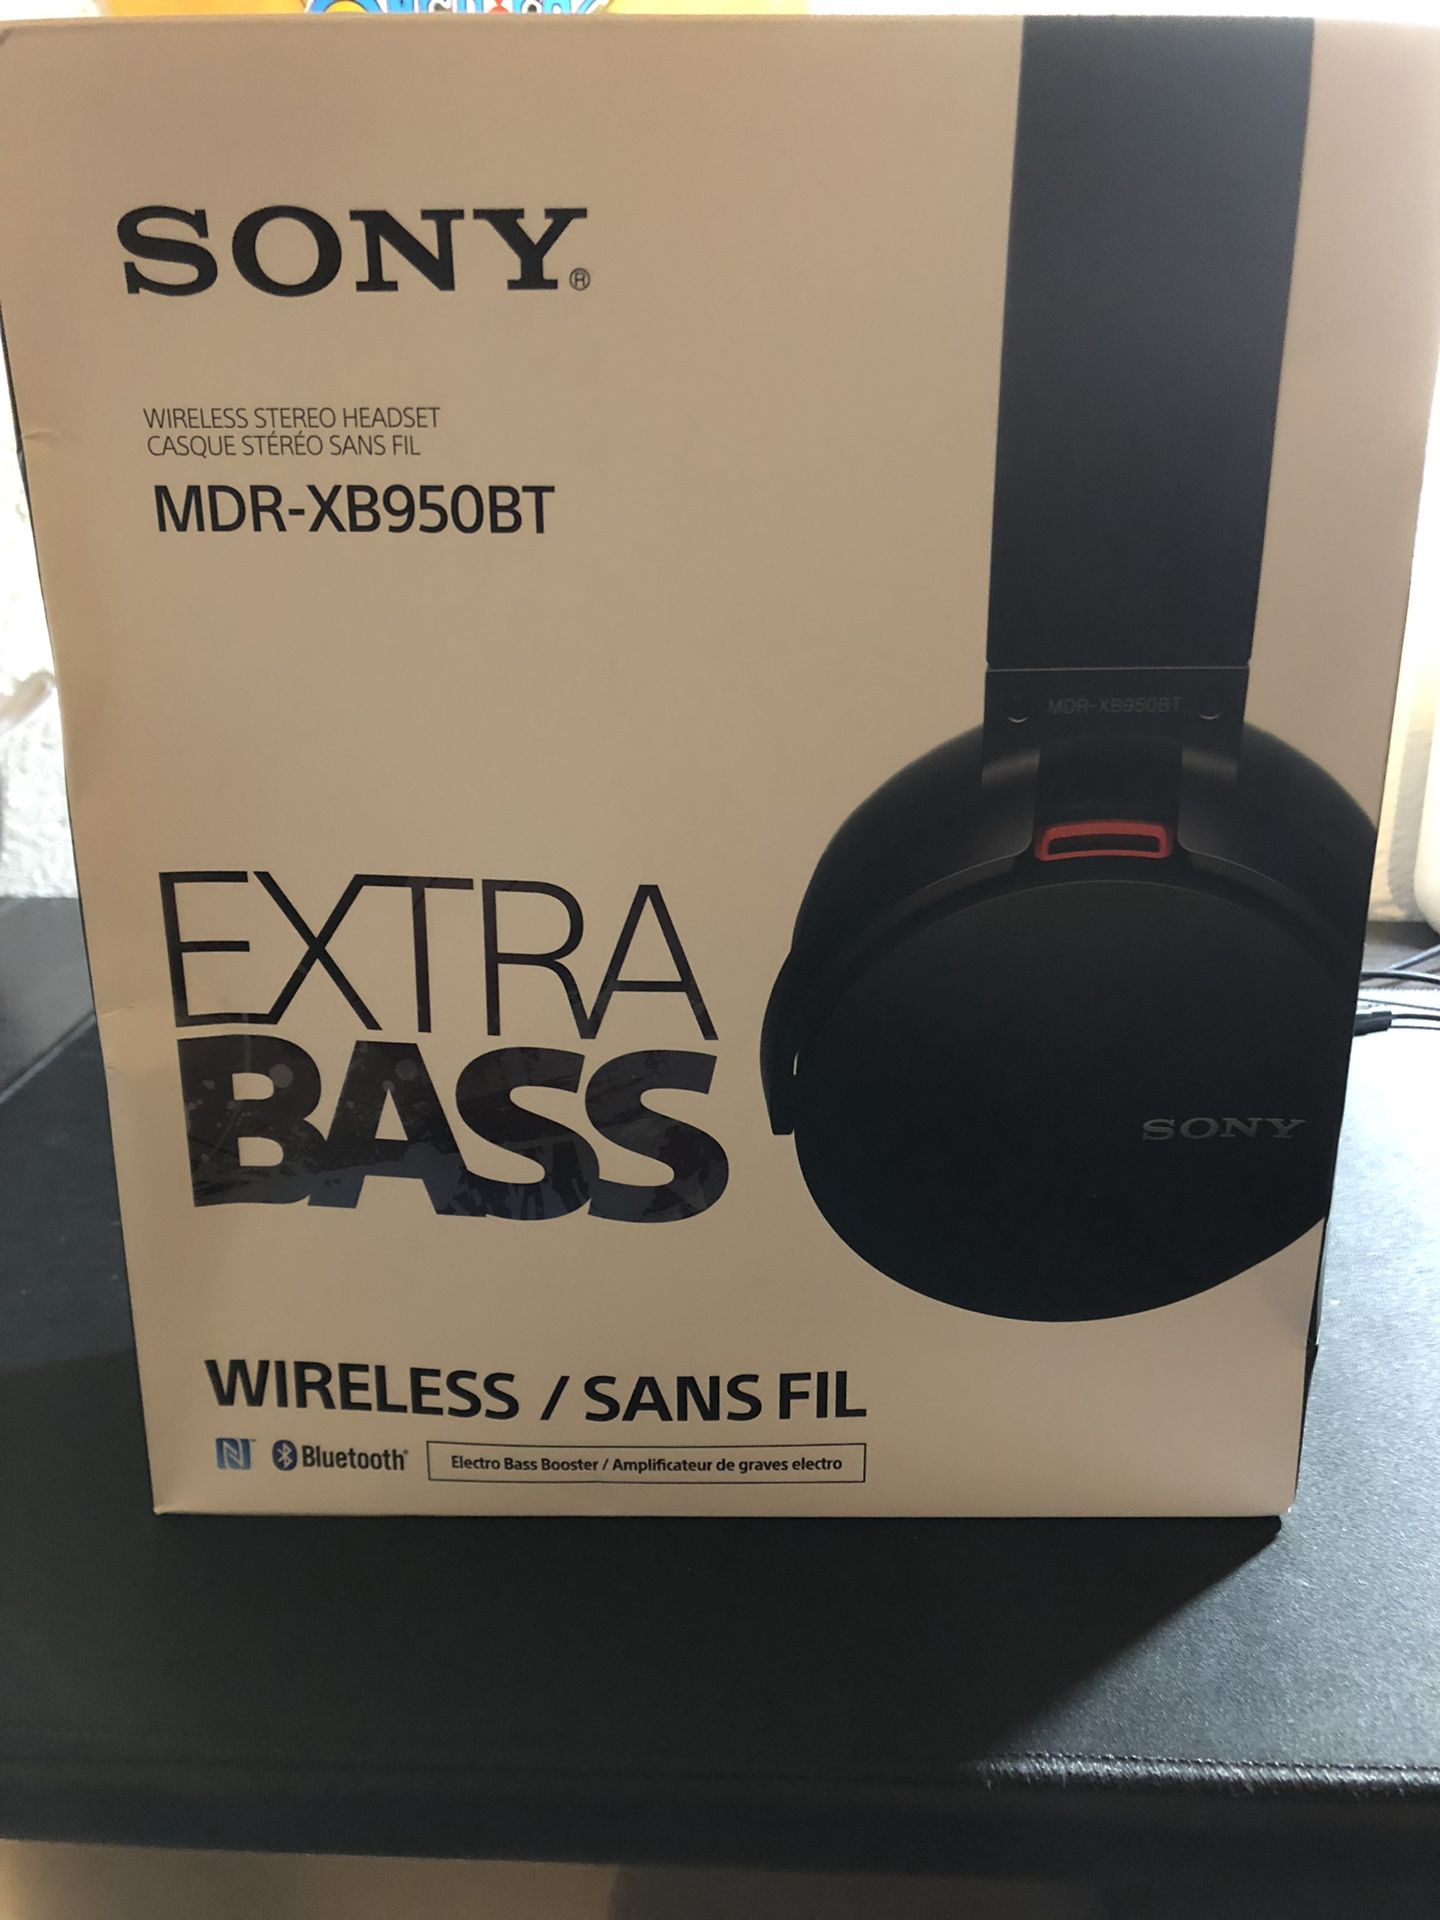 Sony MDR-XB950BT Extra Bass Wireless Headphones.